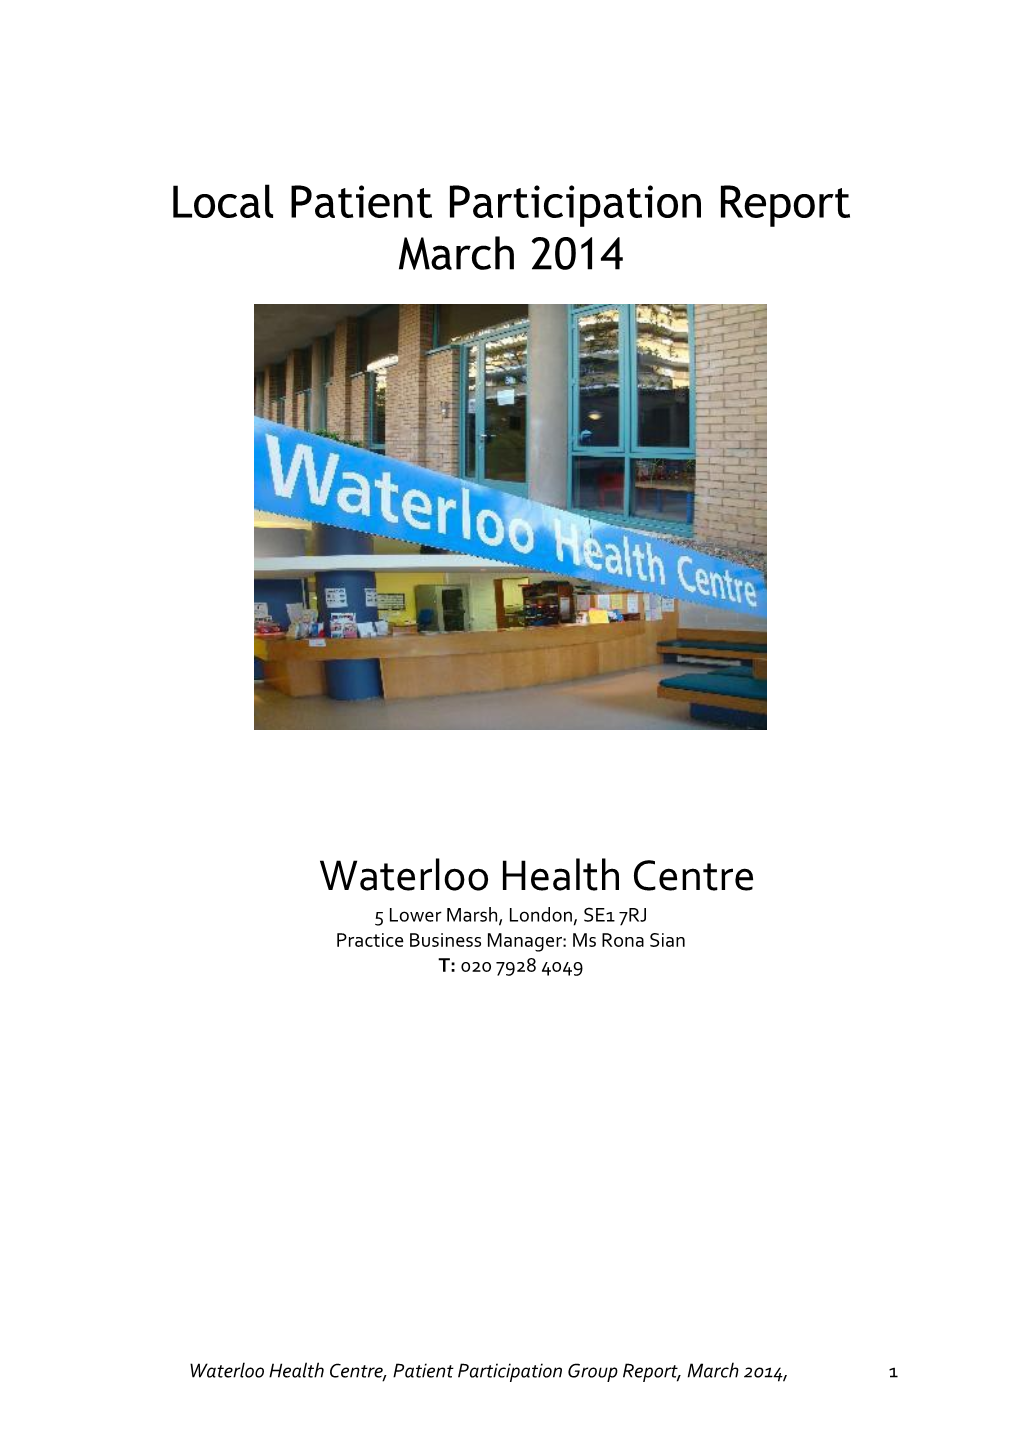 Local Patient Participation Report March 2014